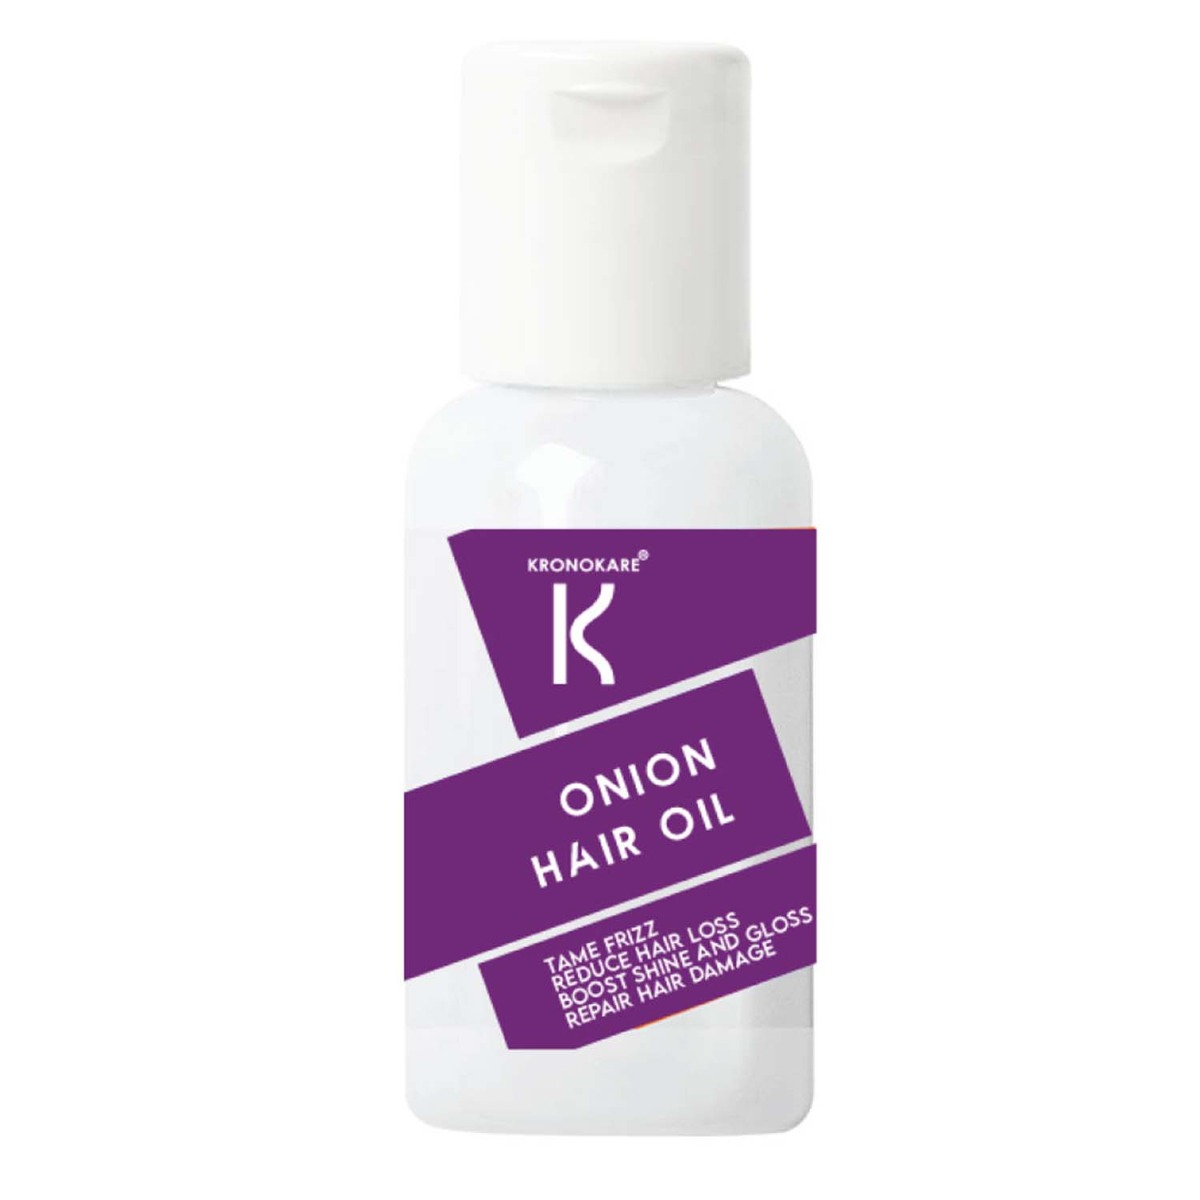 Kronokare Onion Hair Oil - Vegan, 30ml